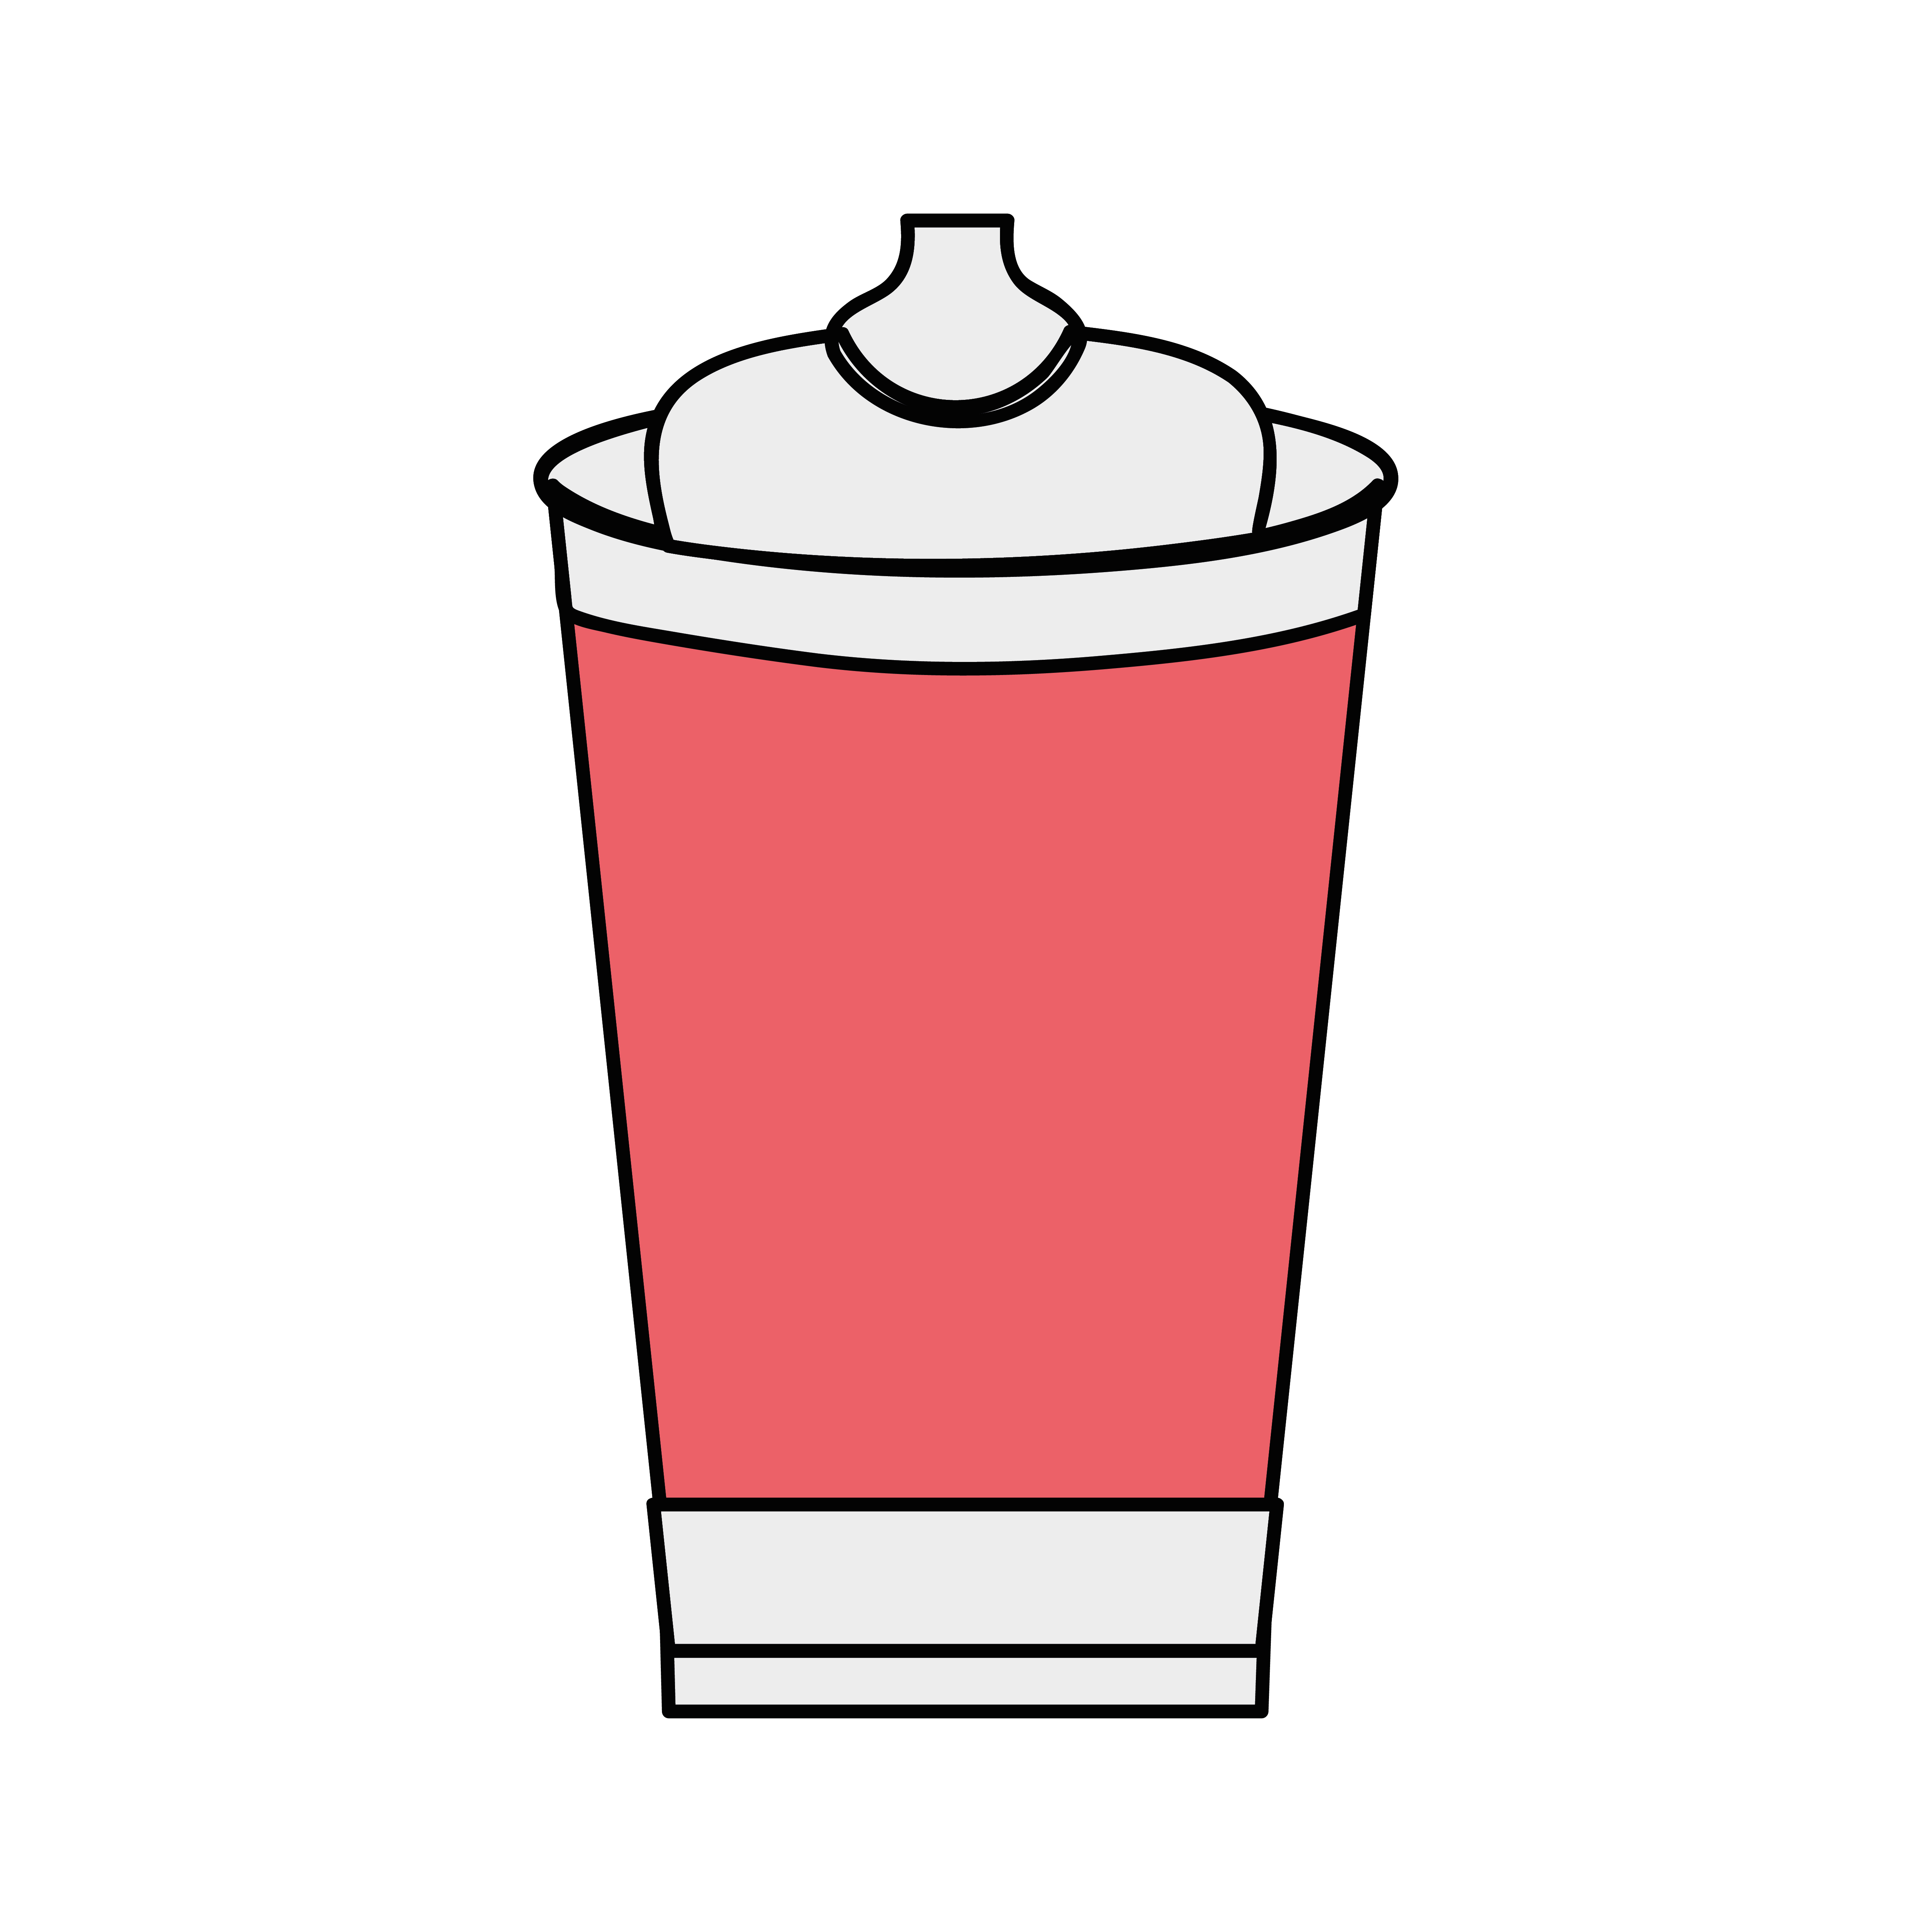 delicious fresh soda plastic cup 650443 - Download Free Vectors